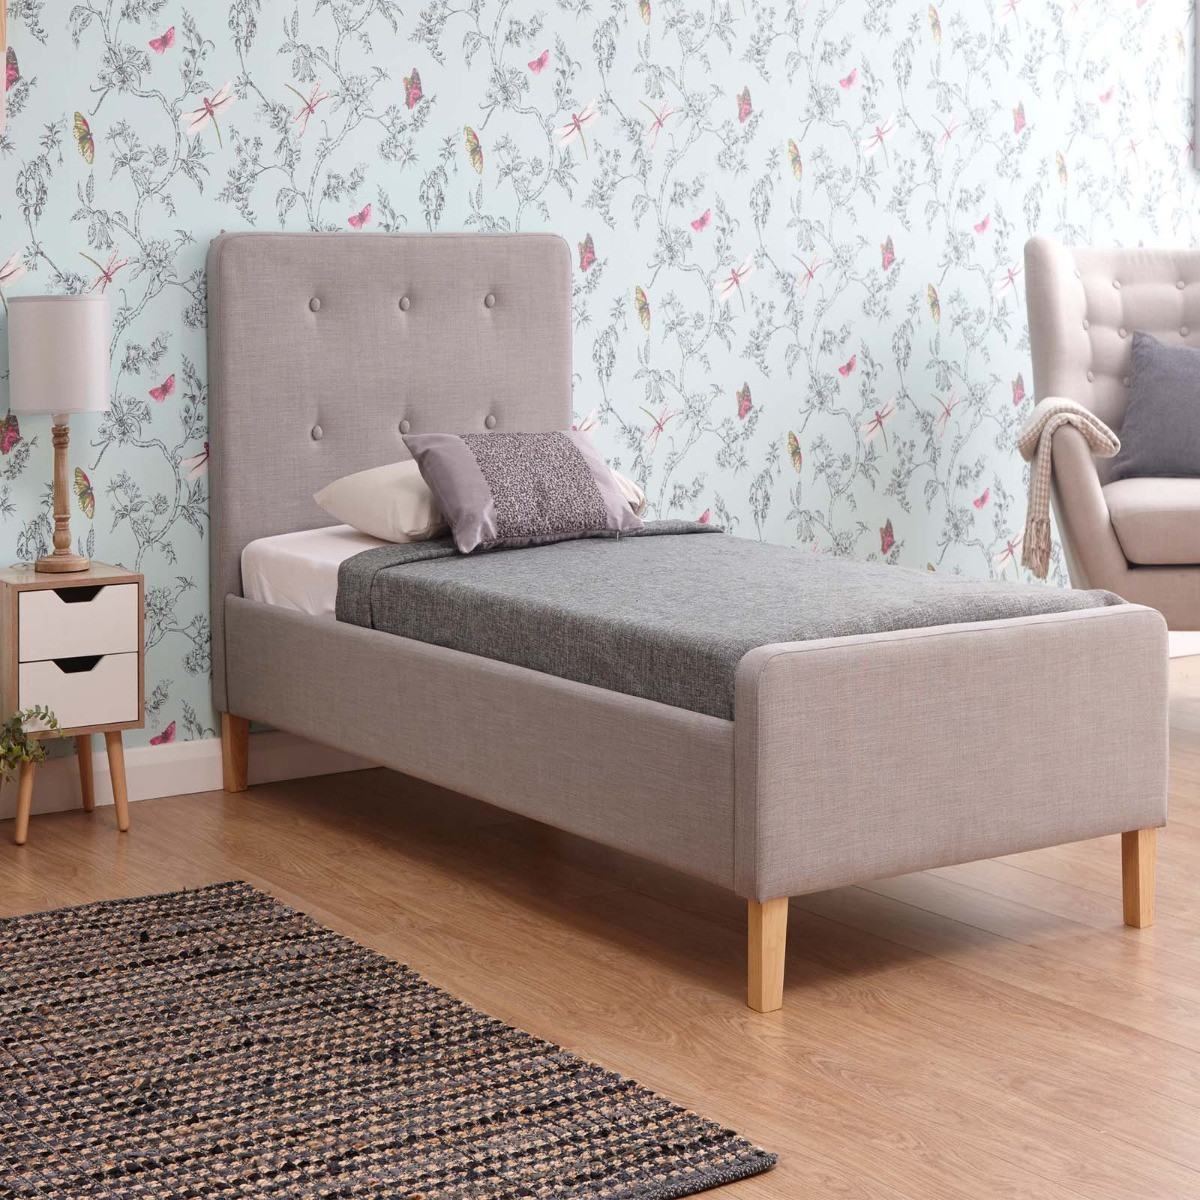 Ashbourne Upholstered Fabric Bed Frame, 4ft 6 Double - Light Grey>